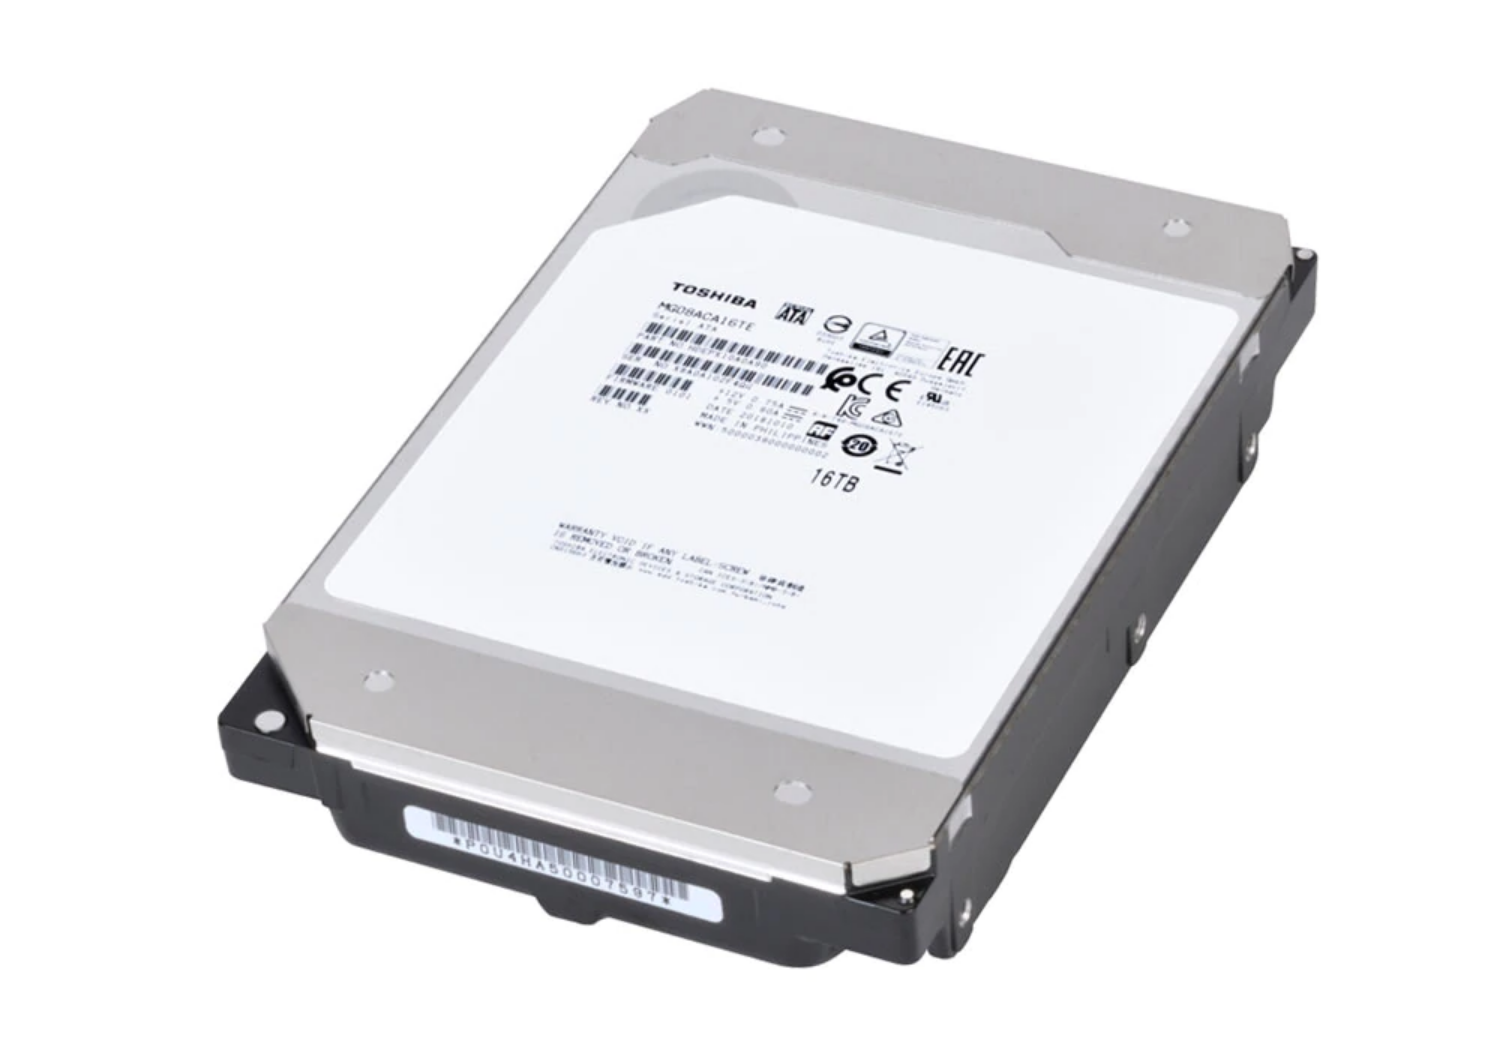 Жесткие диски Toshiba на 16 ТБ совместимы с Adaptec Smart Storage